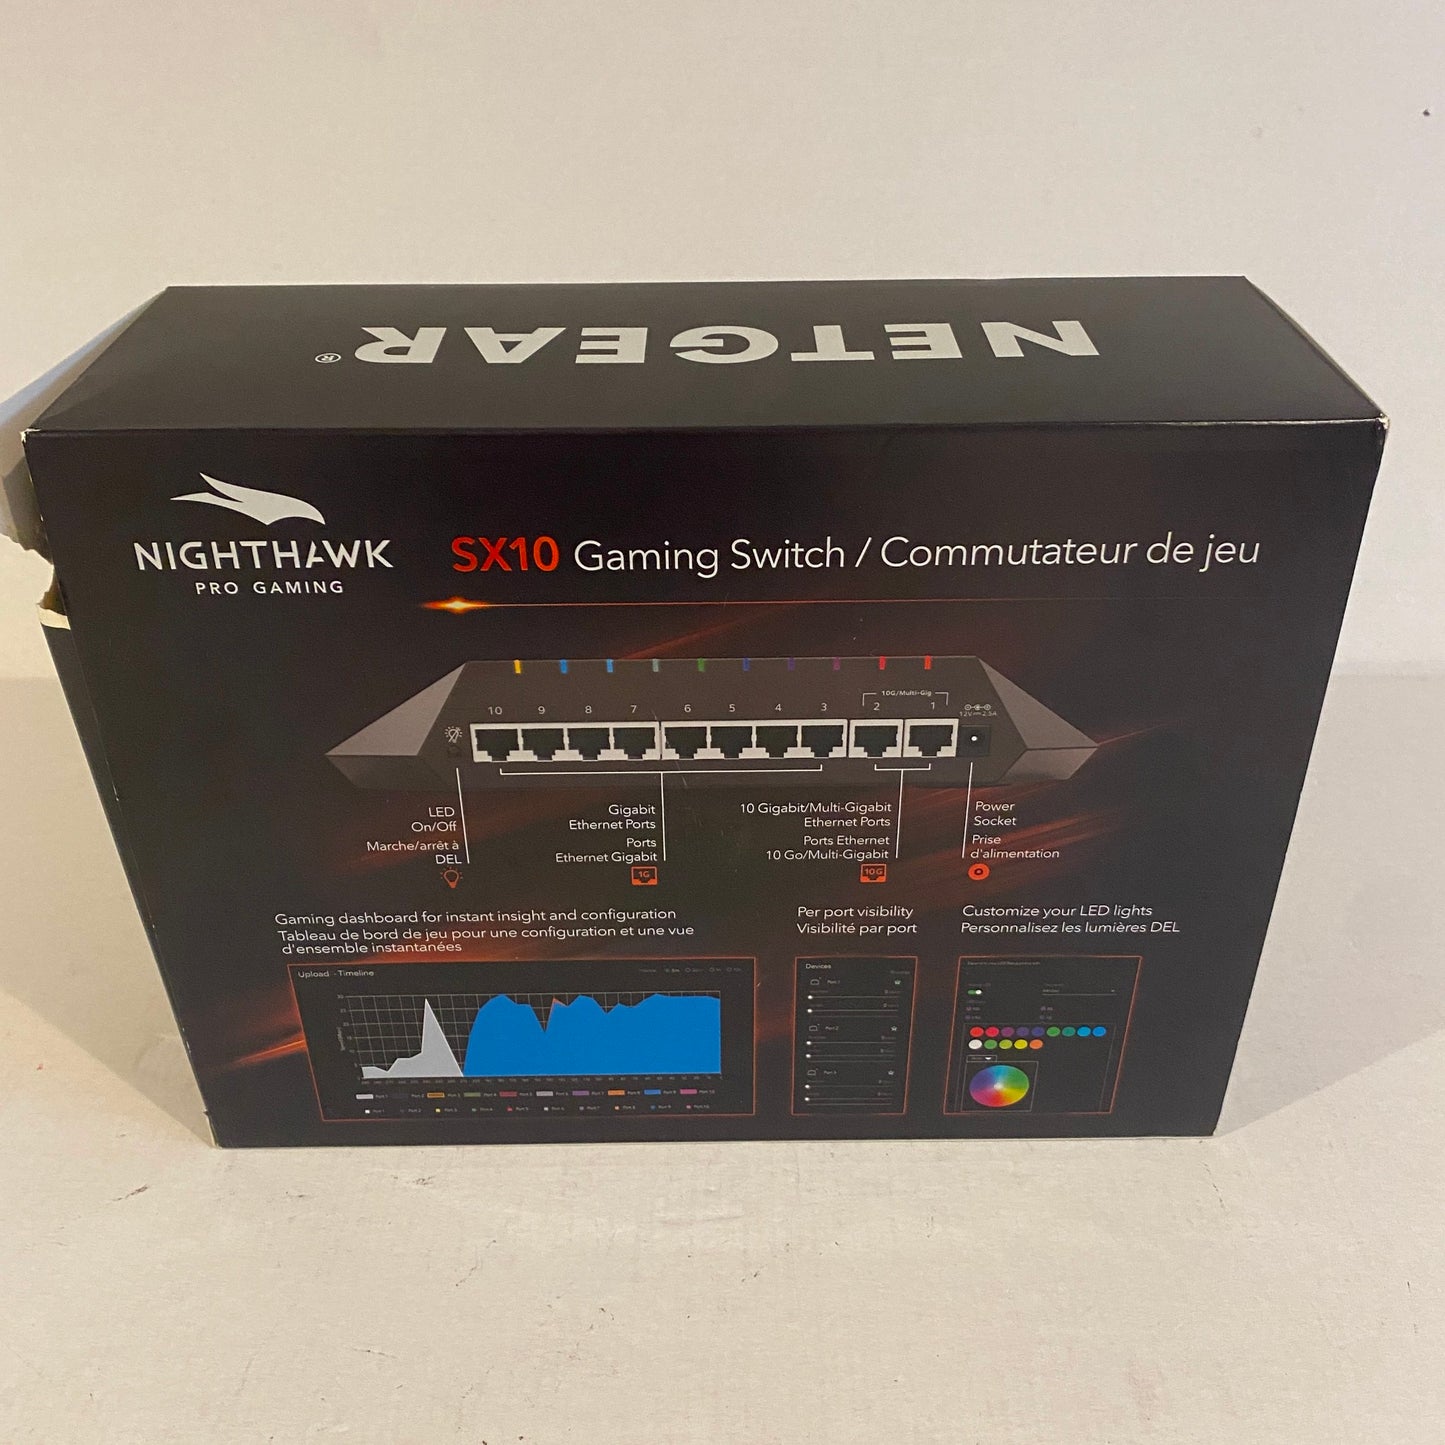 Netgear Nighthawk SX10 10-Gigabit/Multi-Gigabit Gaming Switch